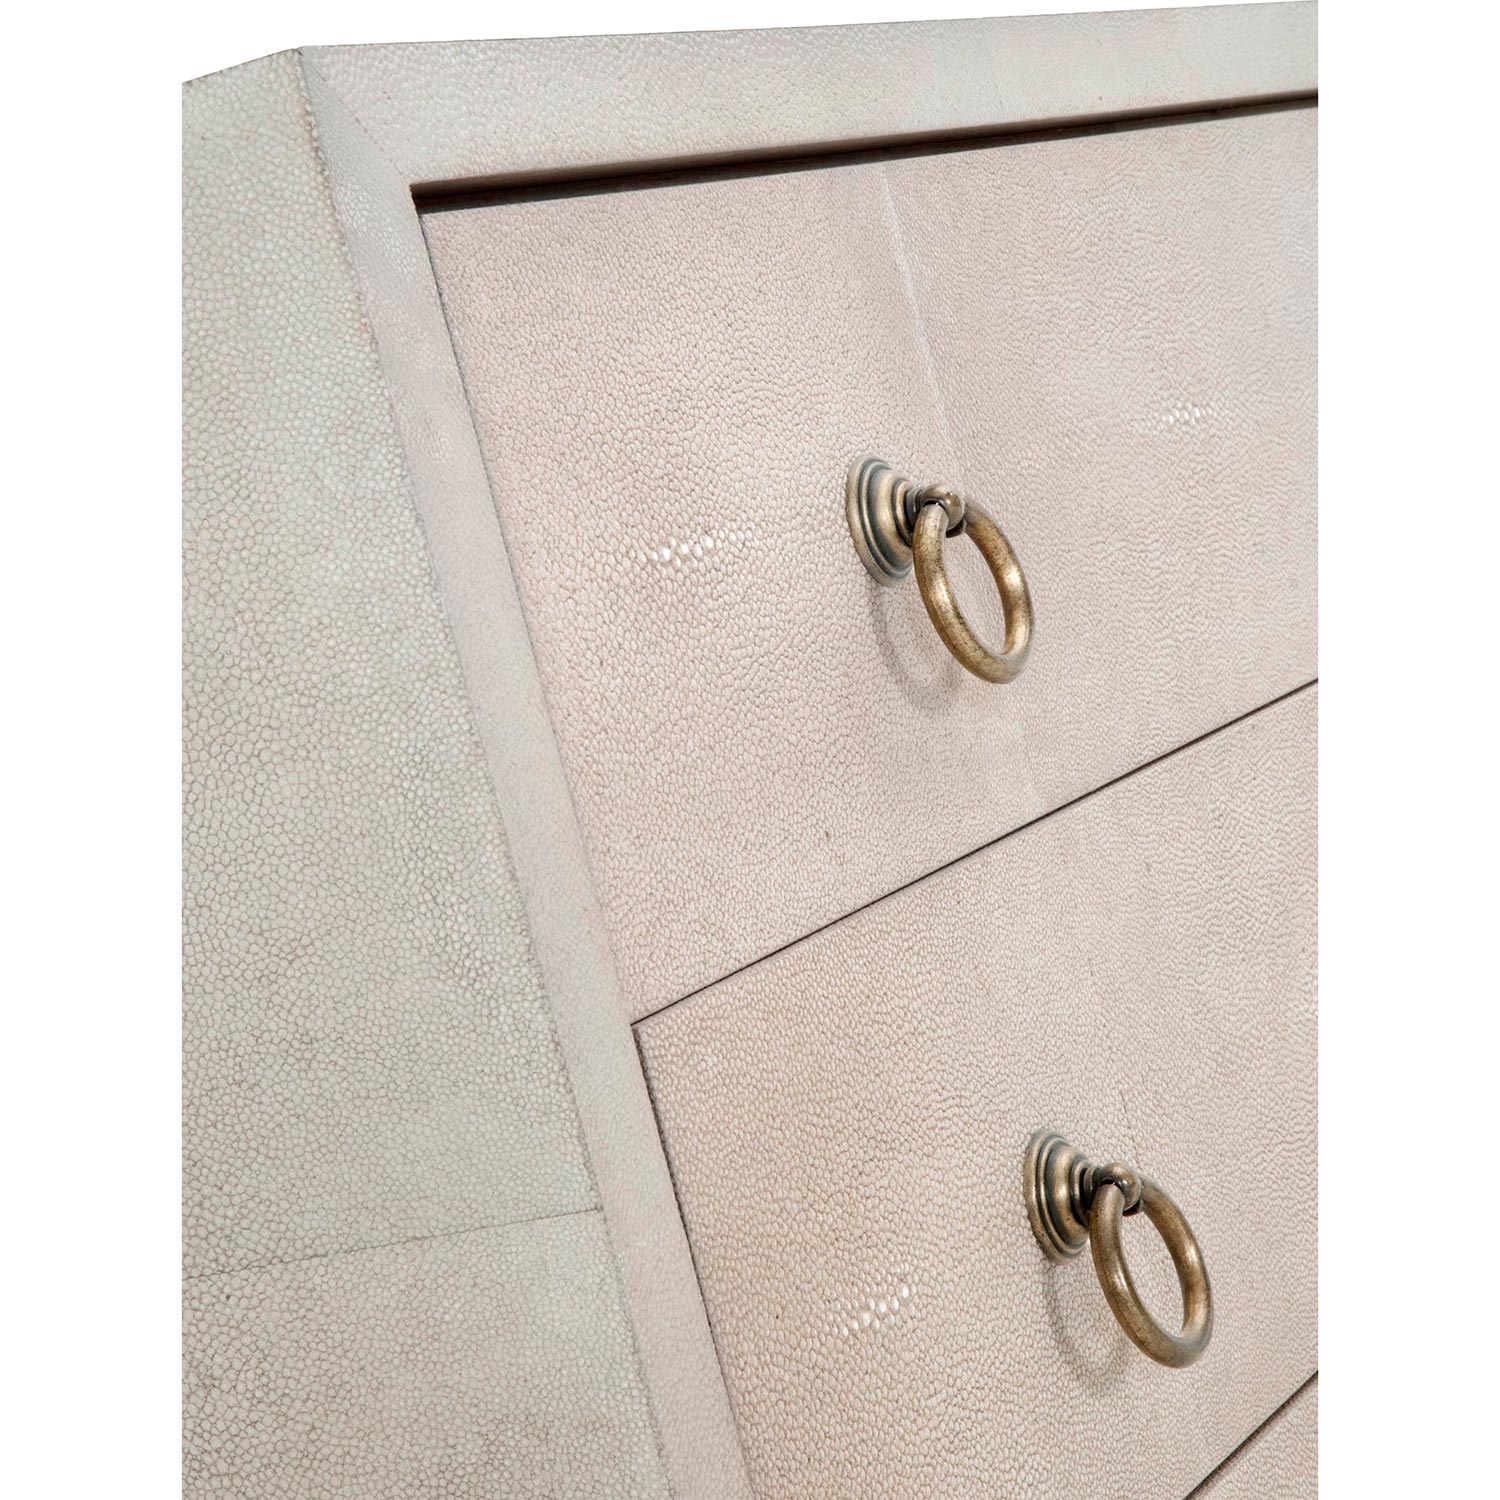 Simon Modern Classic 6-Drawer White Shagreen Bruhsed Gold Double Dresser - Image 2